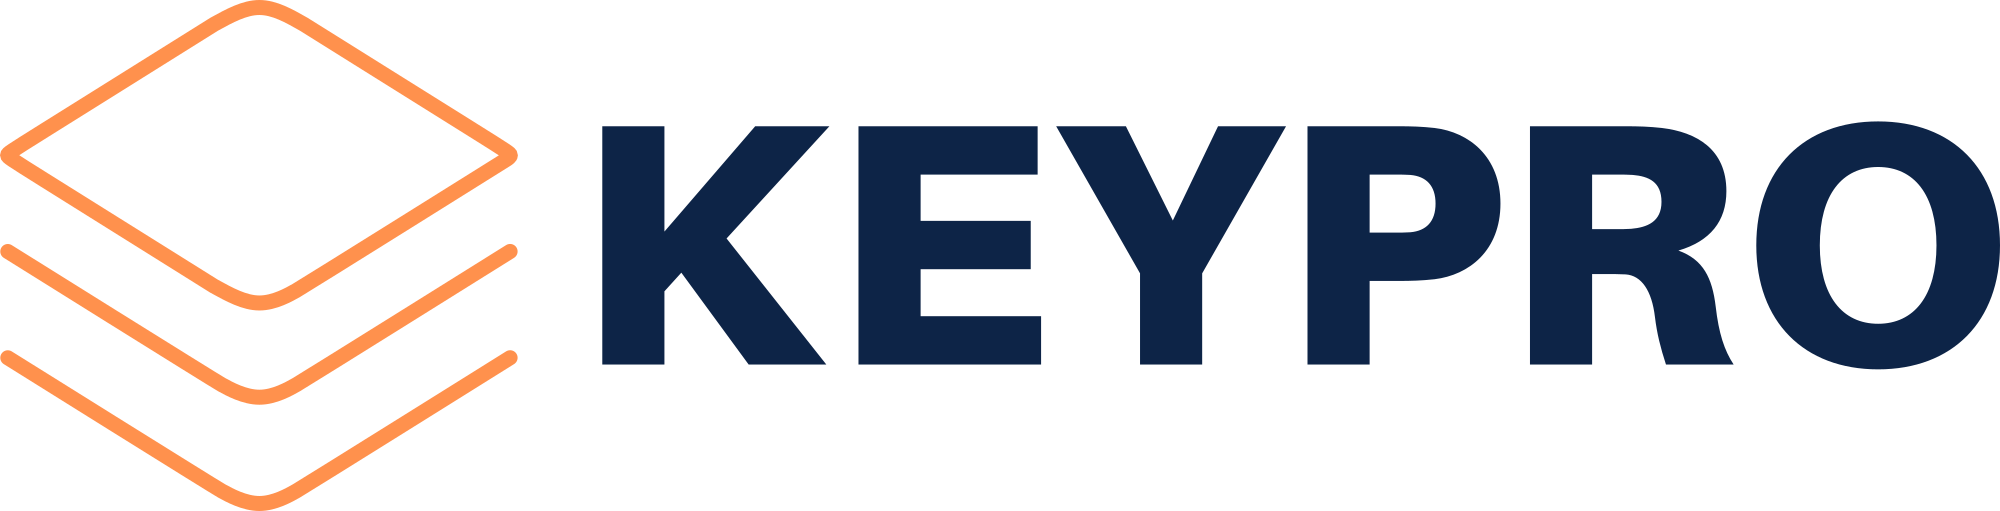 Keypro logo 2020 orange-blue 2000px (003)